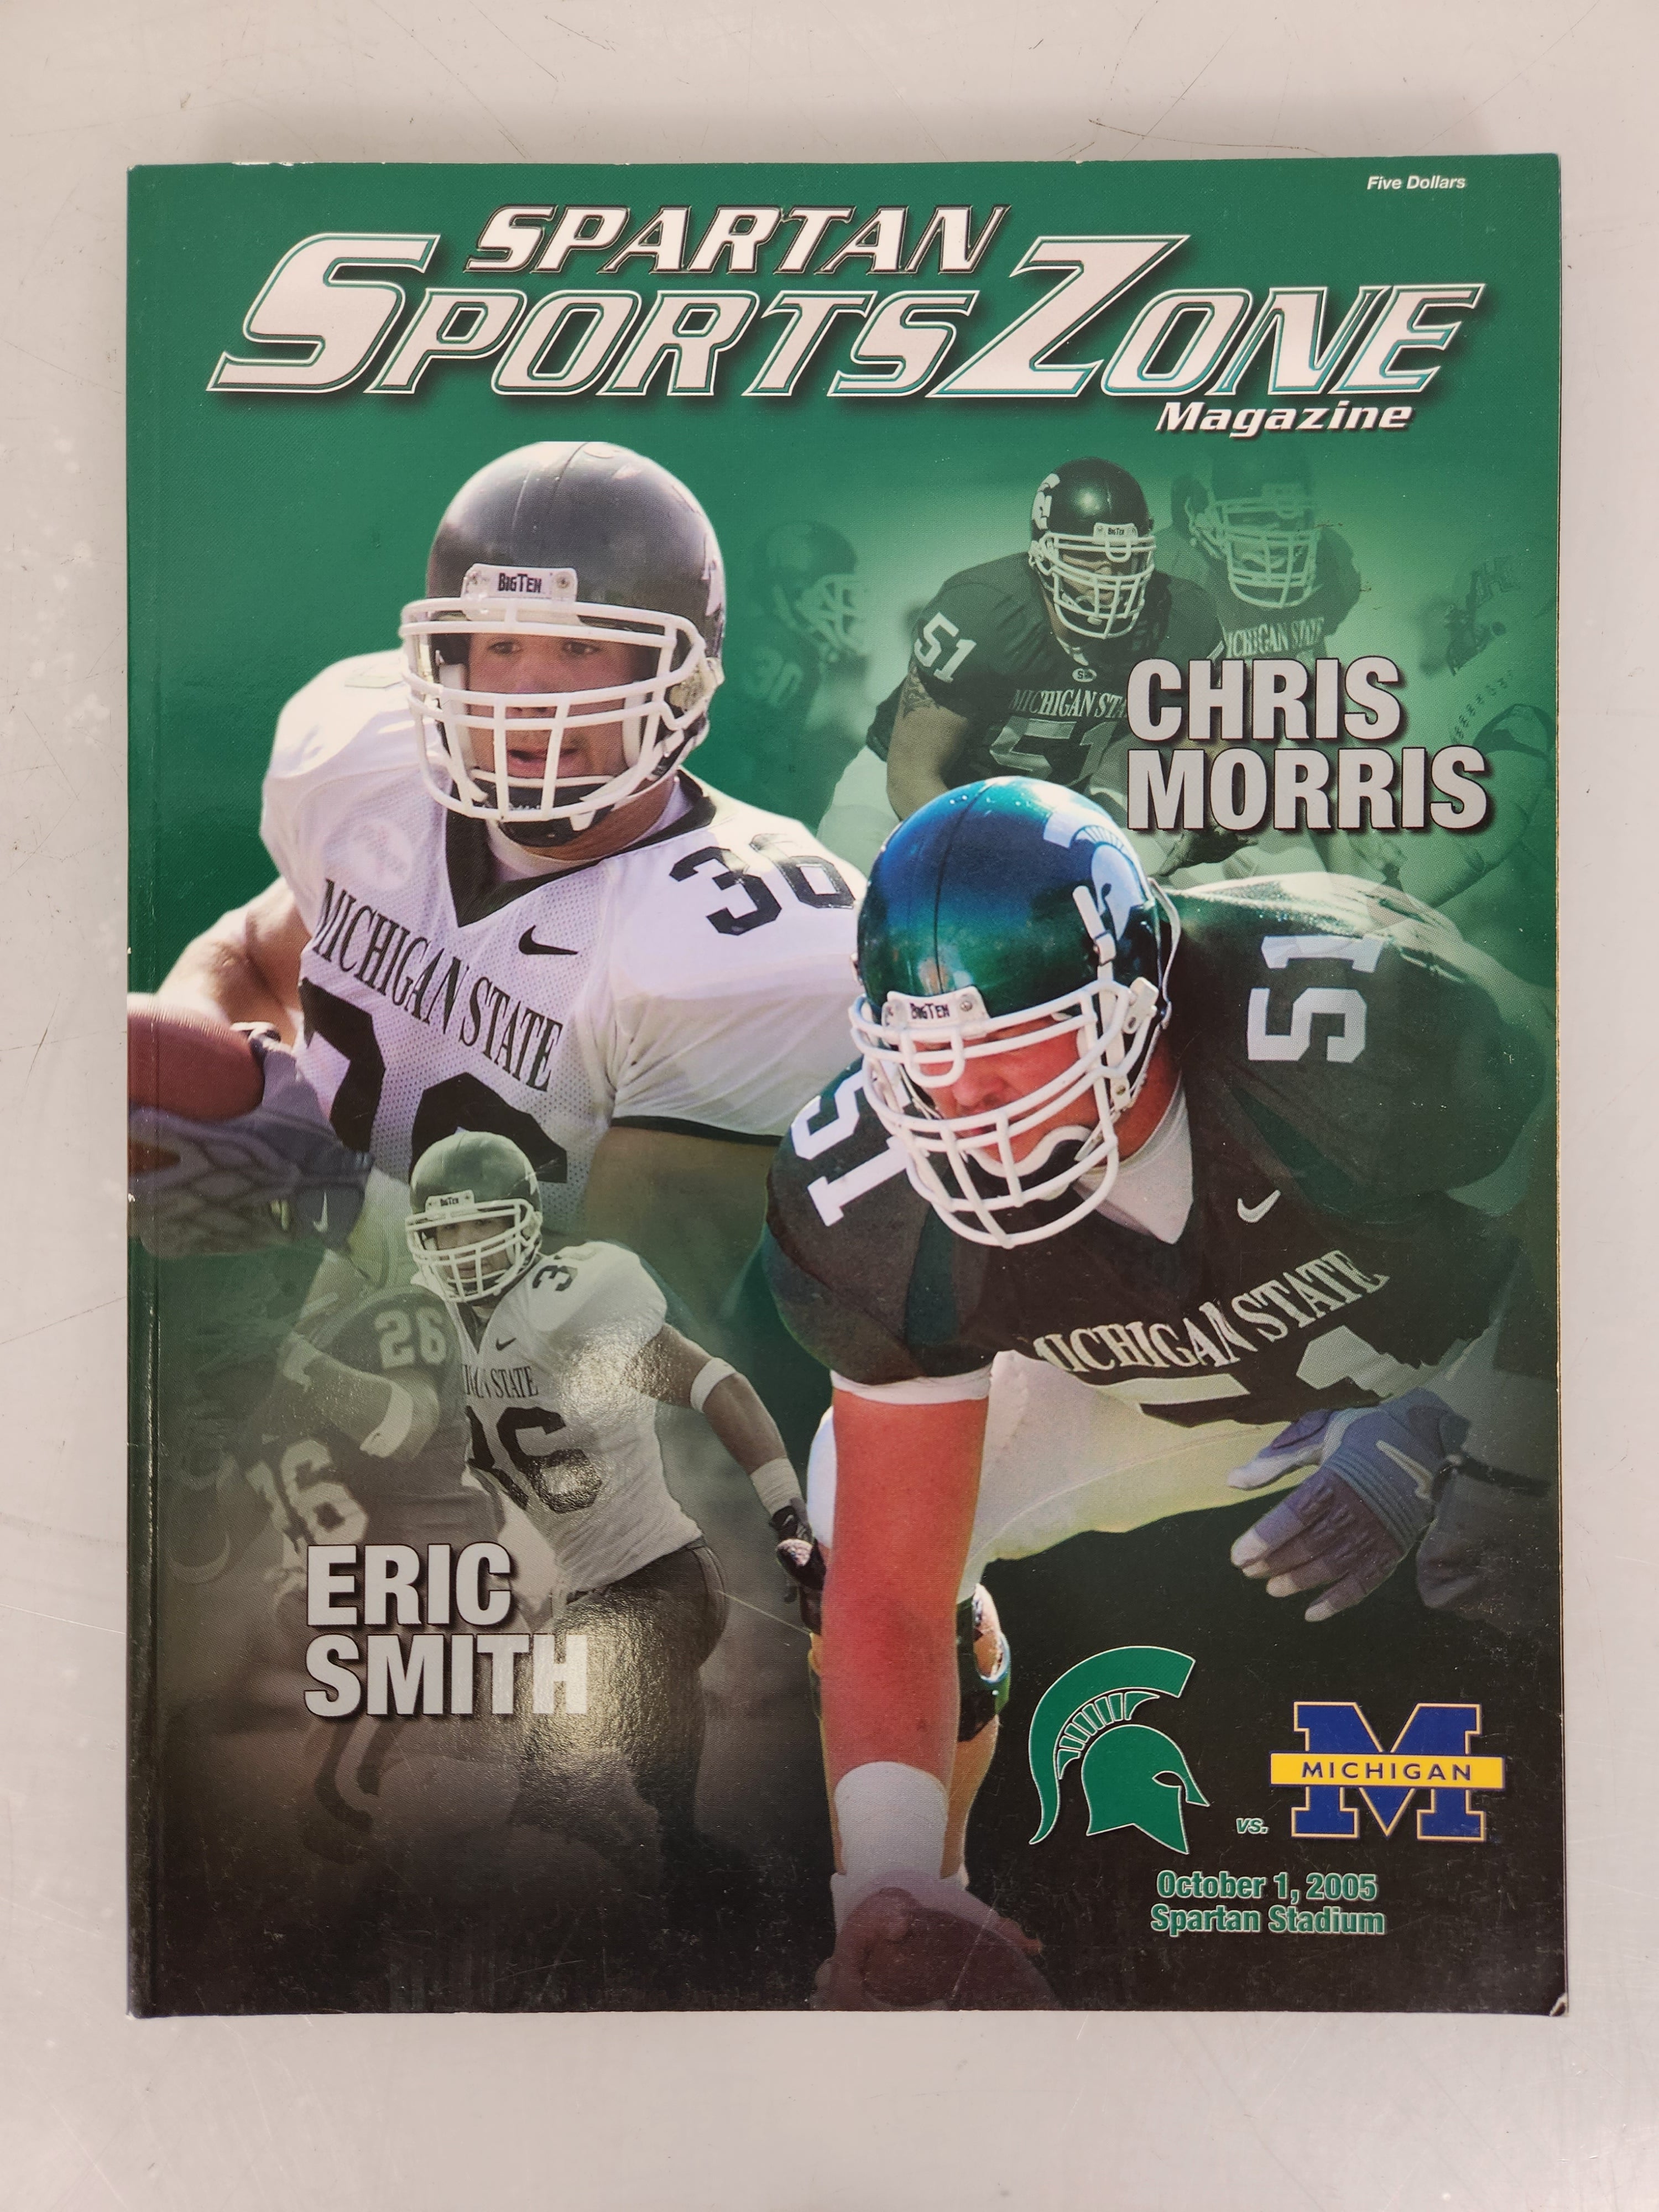 2005 Michigan State vs Michigan Spartan SportsZone Magazine Football Program